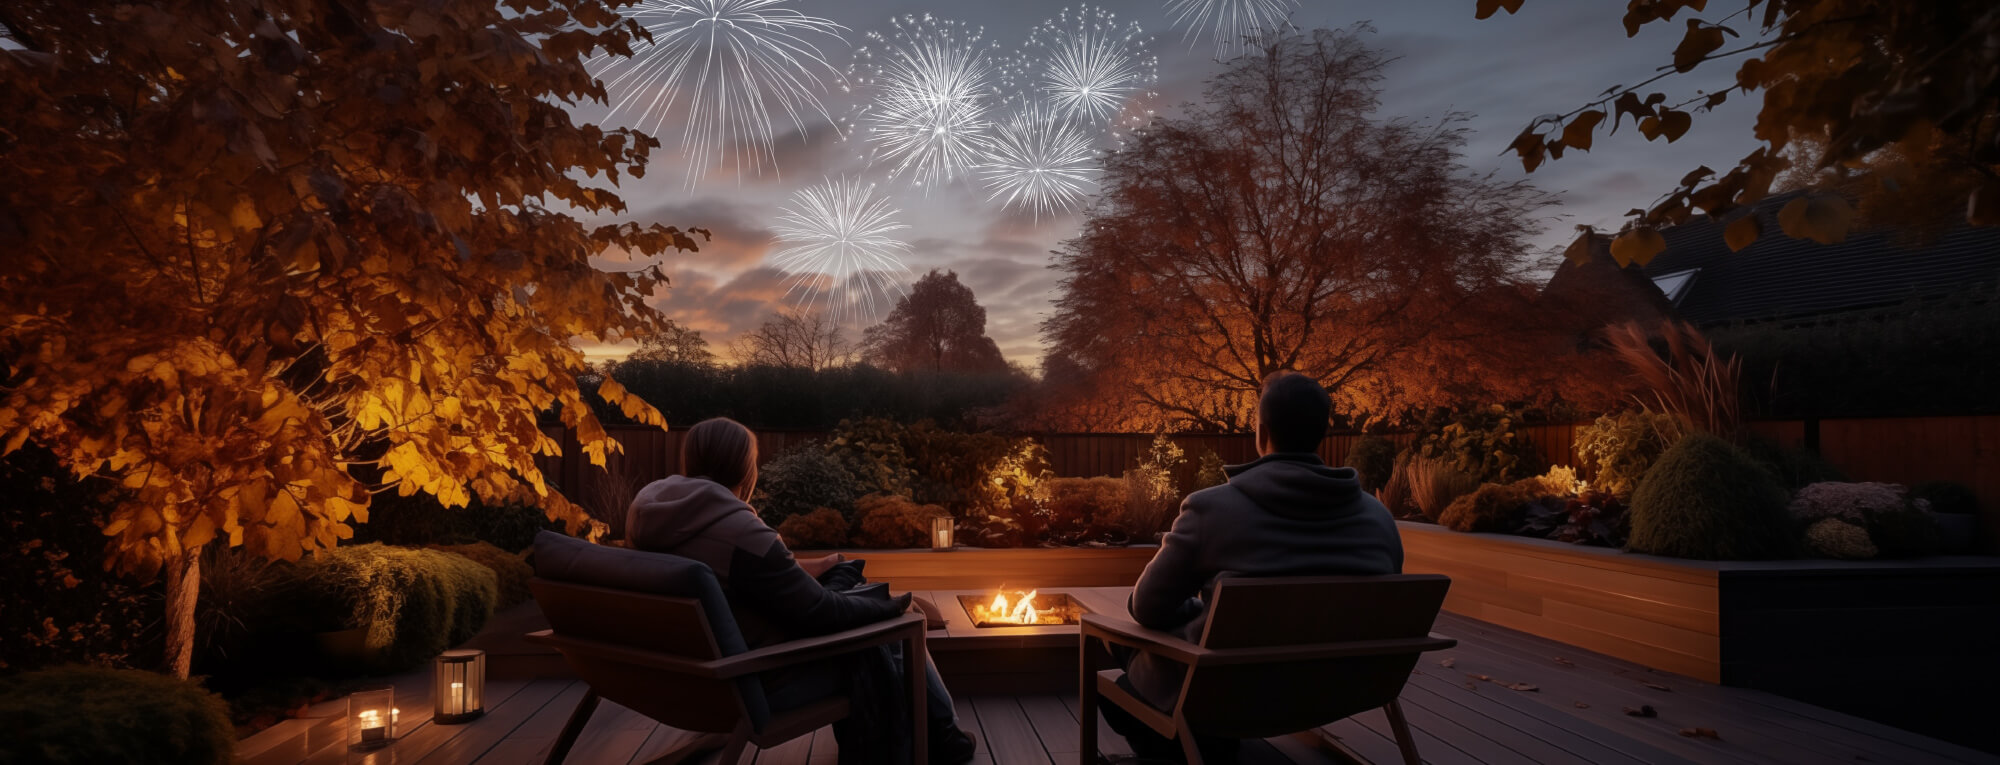 STORM Deckorators UK watching fireworks on composite decking